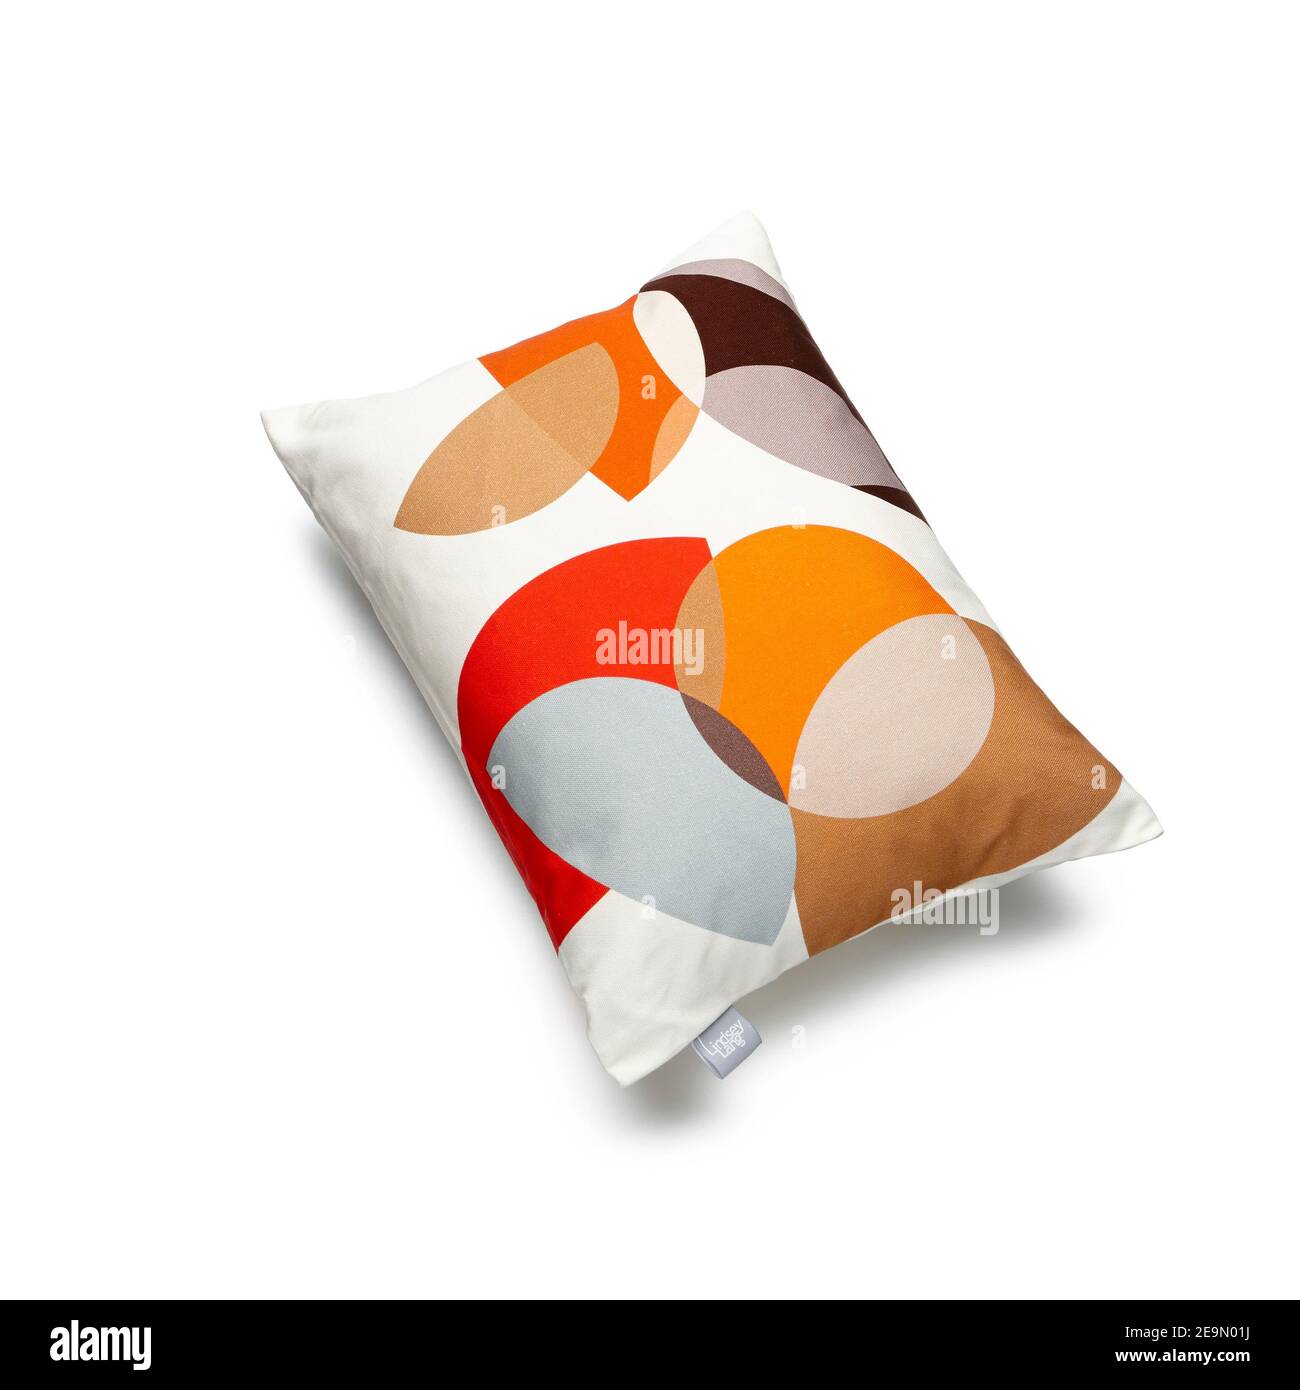 cushion cut out design designer elegant perfect modern white background Stock Photo